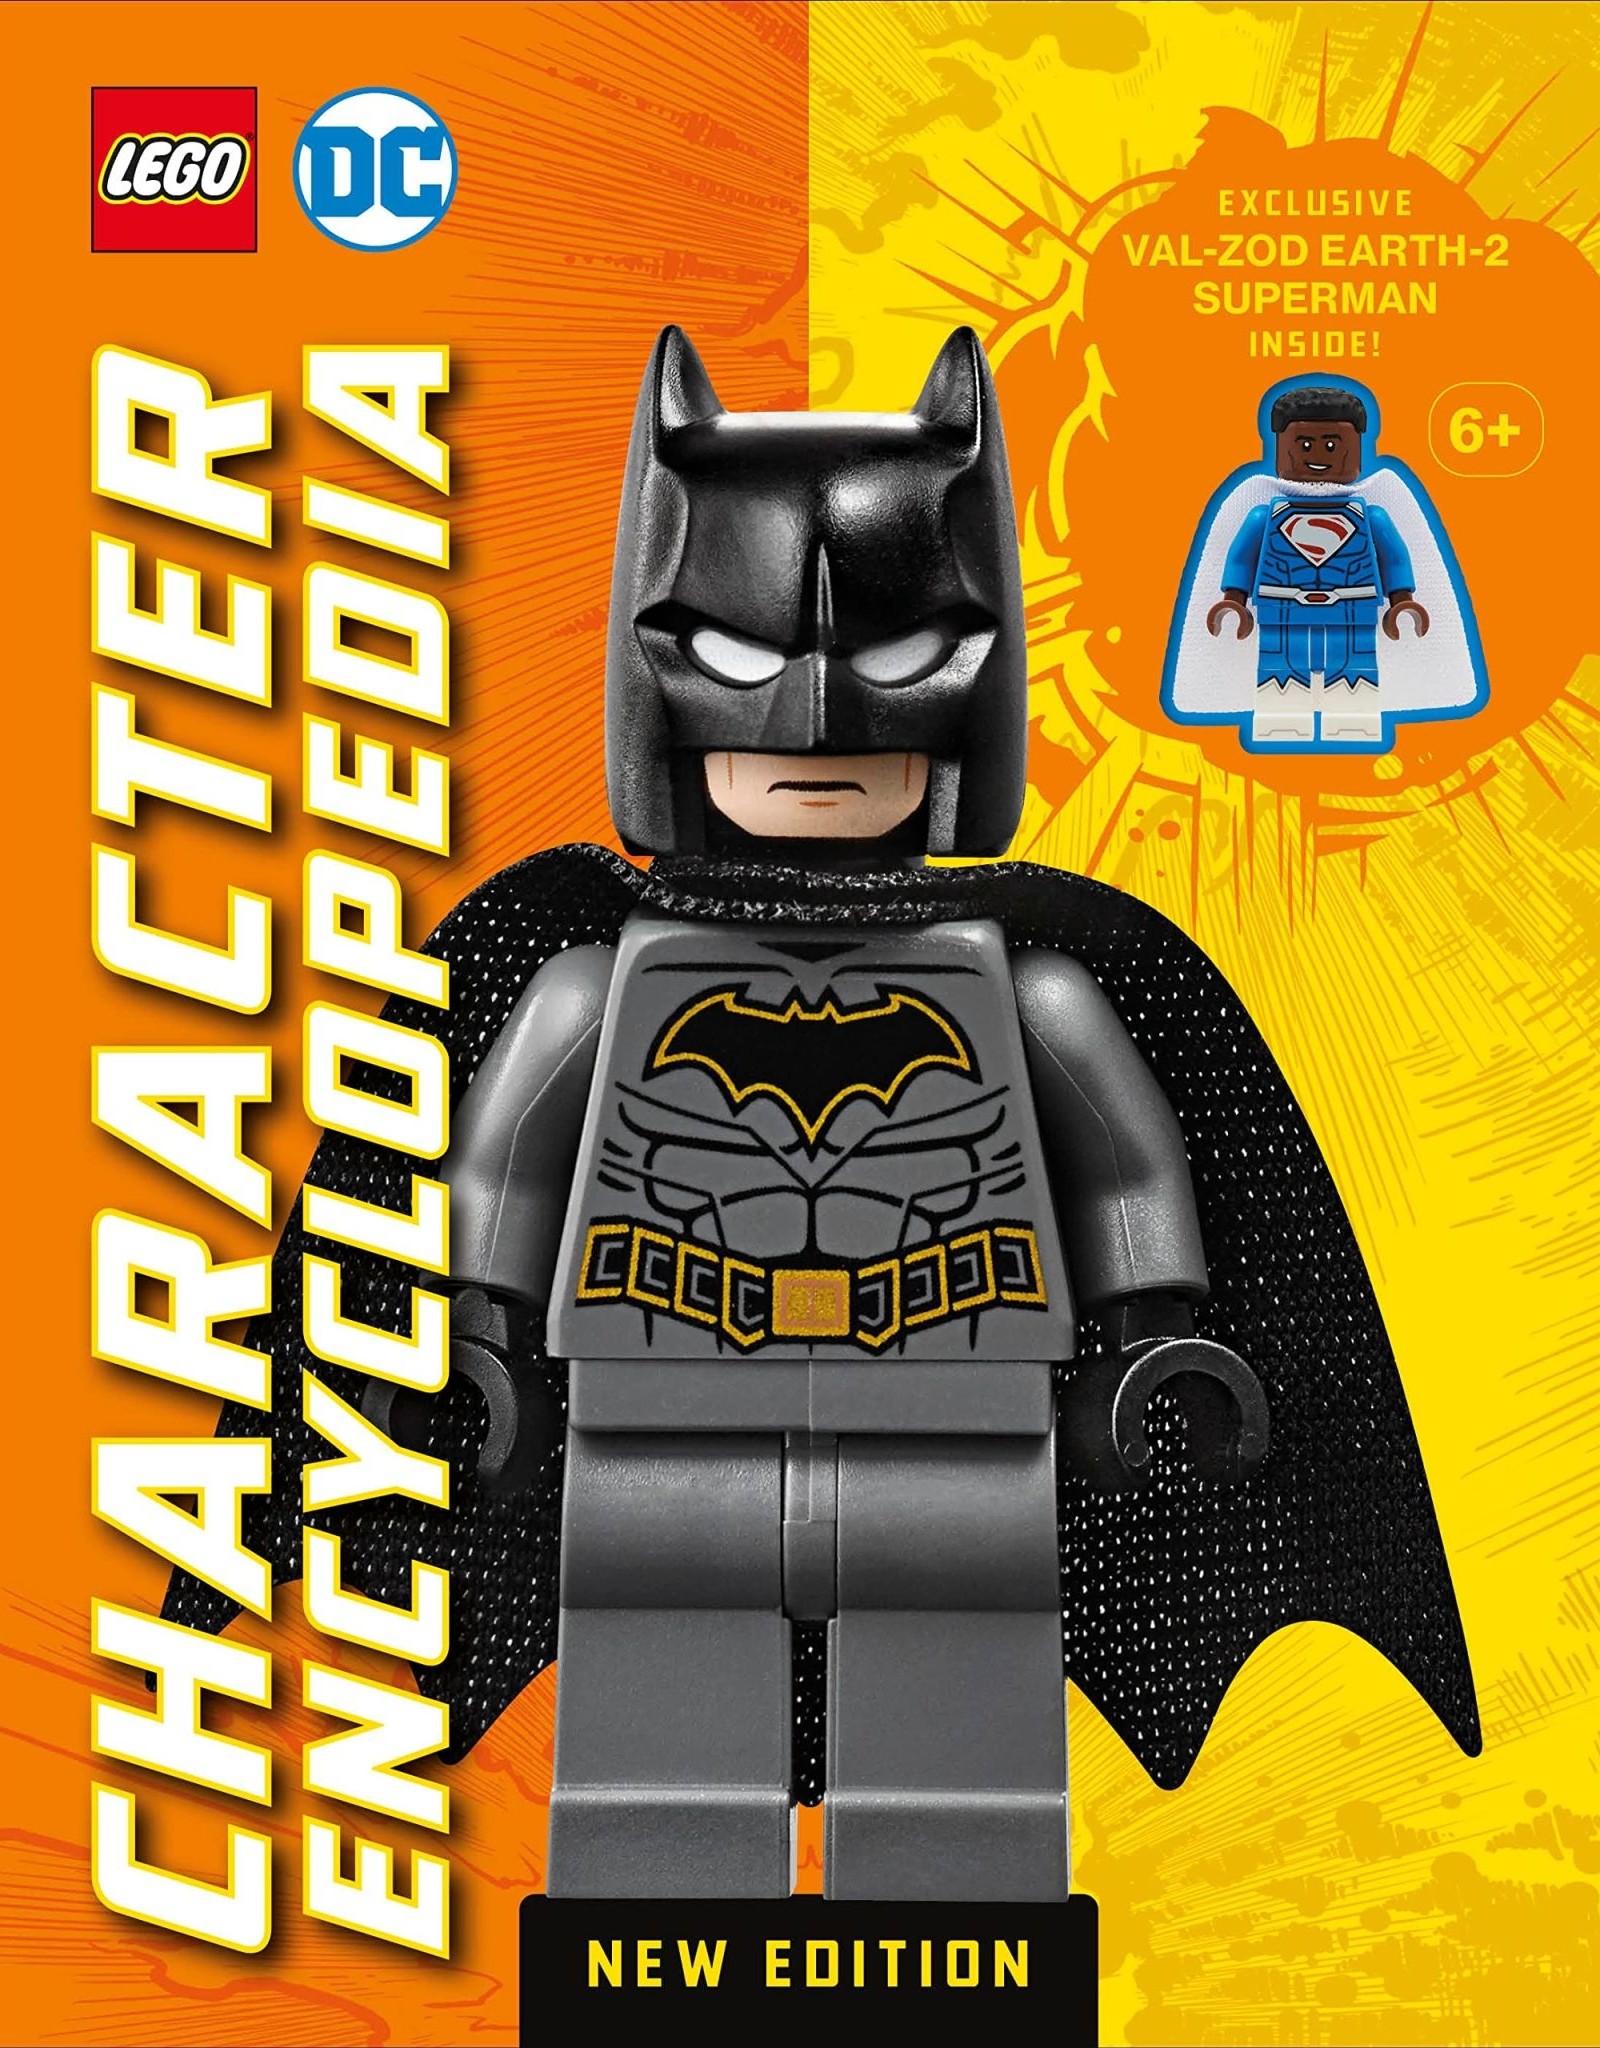 LEGO Classic LEGO Character Encyclopedia New Edition